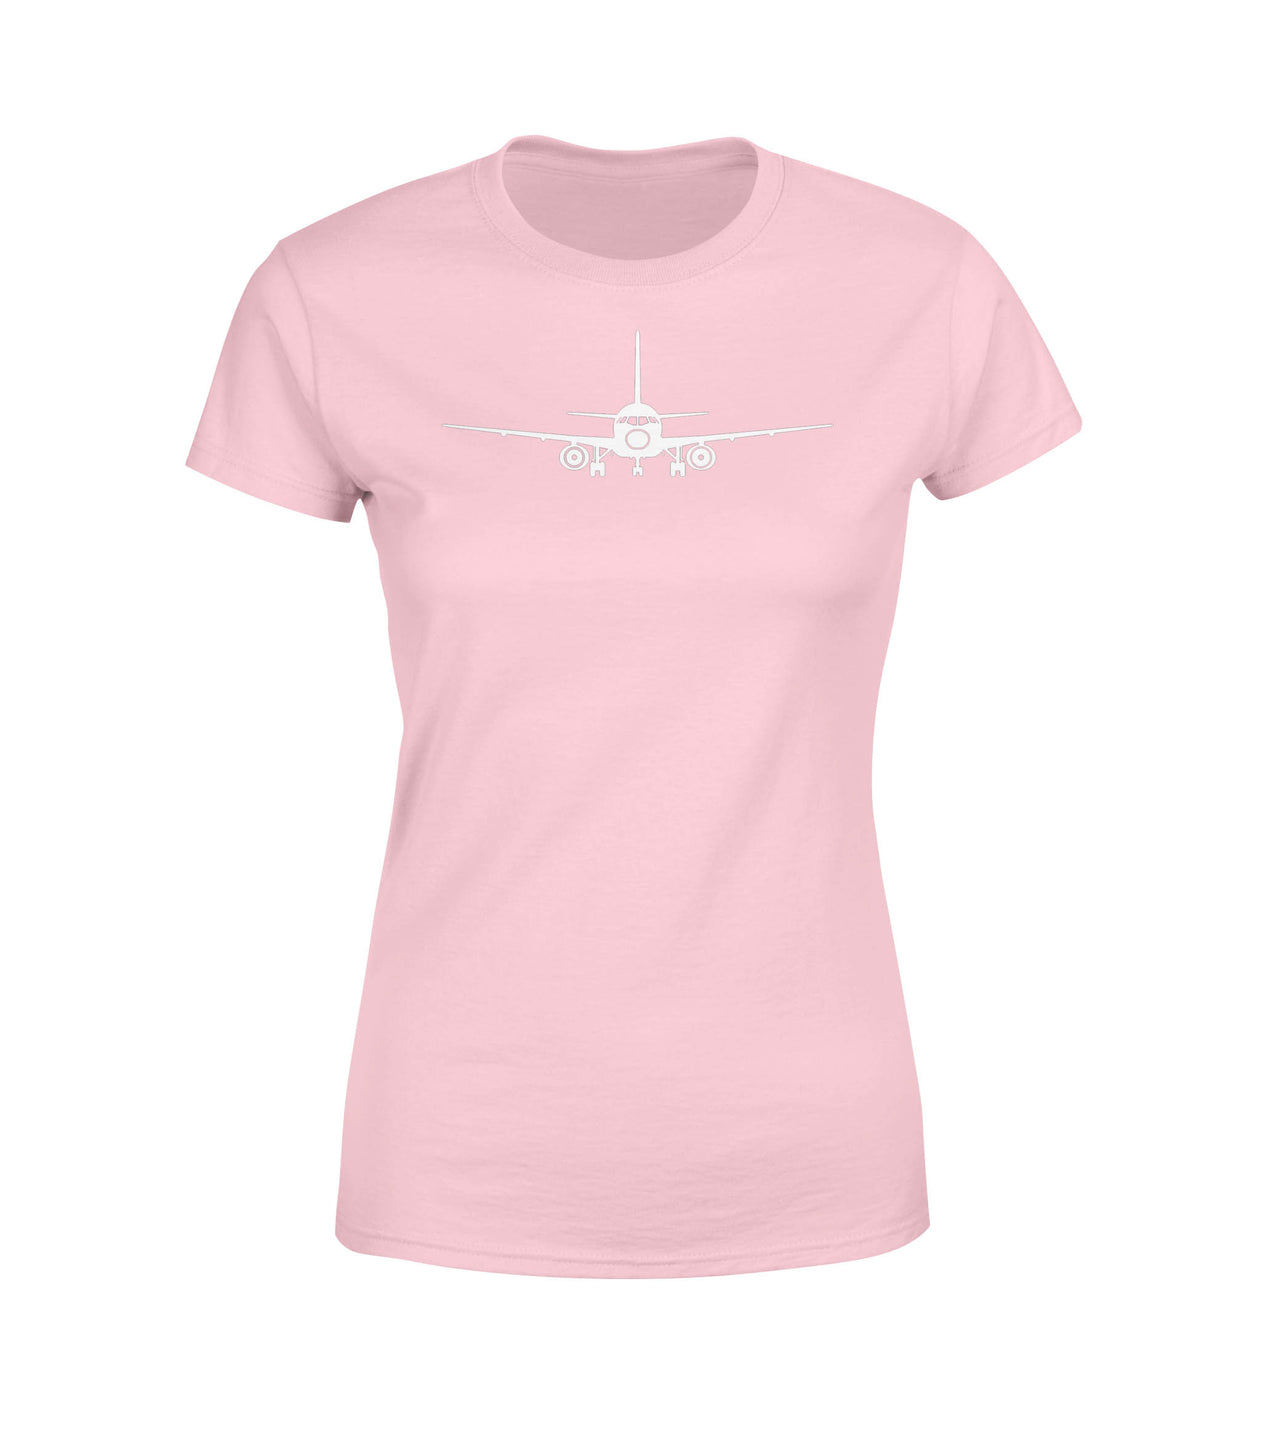 Sukhoi Superjet 100 Silhouette Designed Women T-Shirts